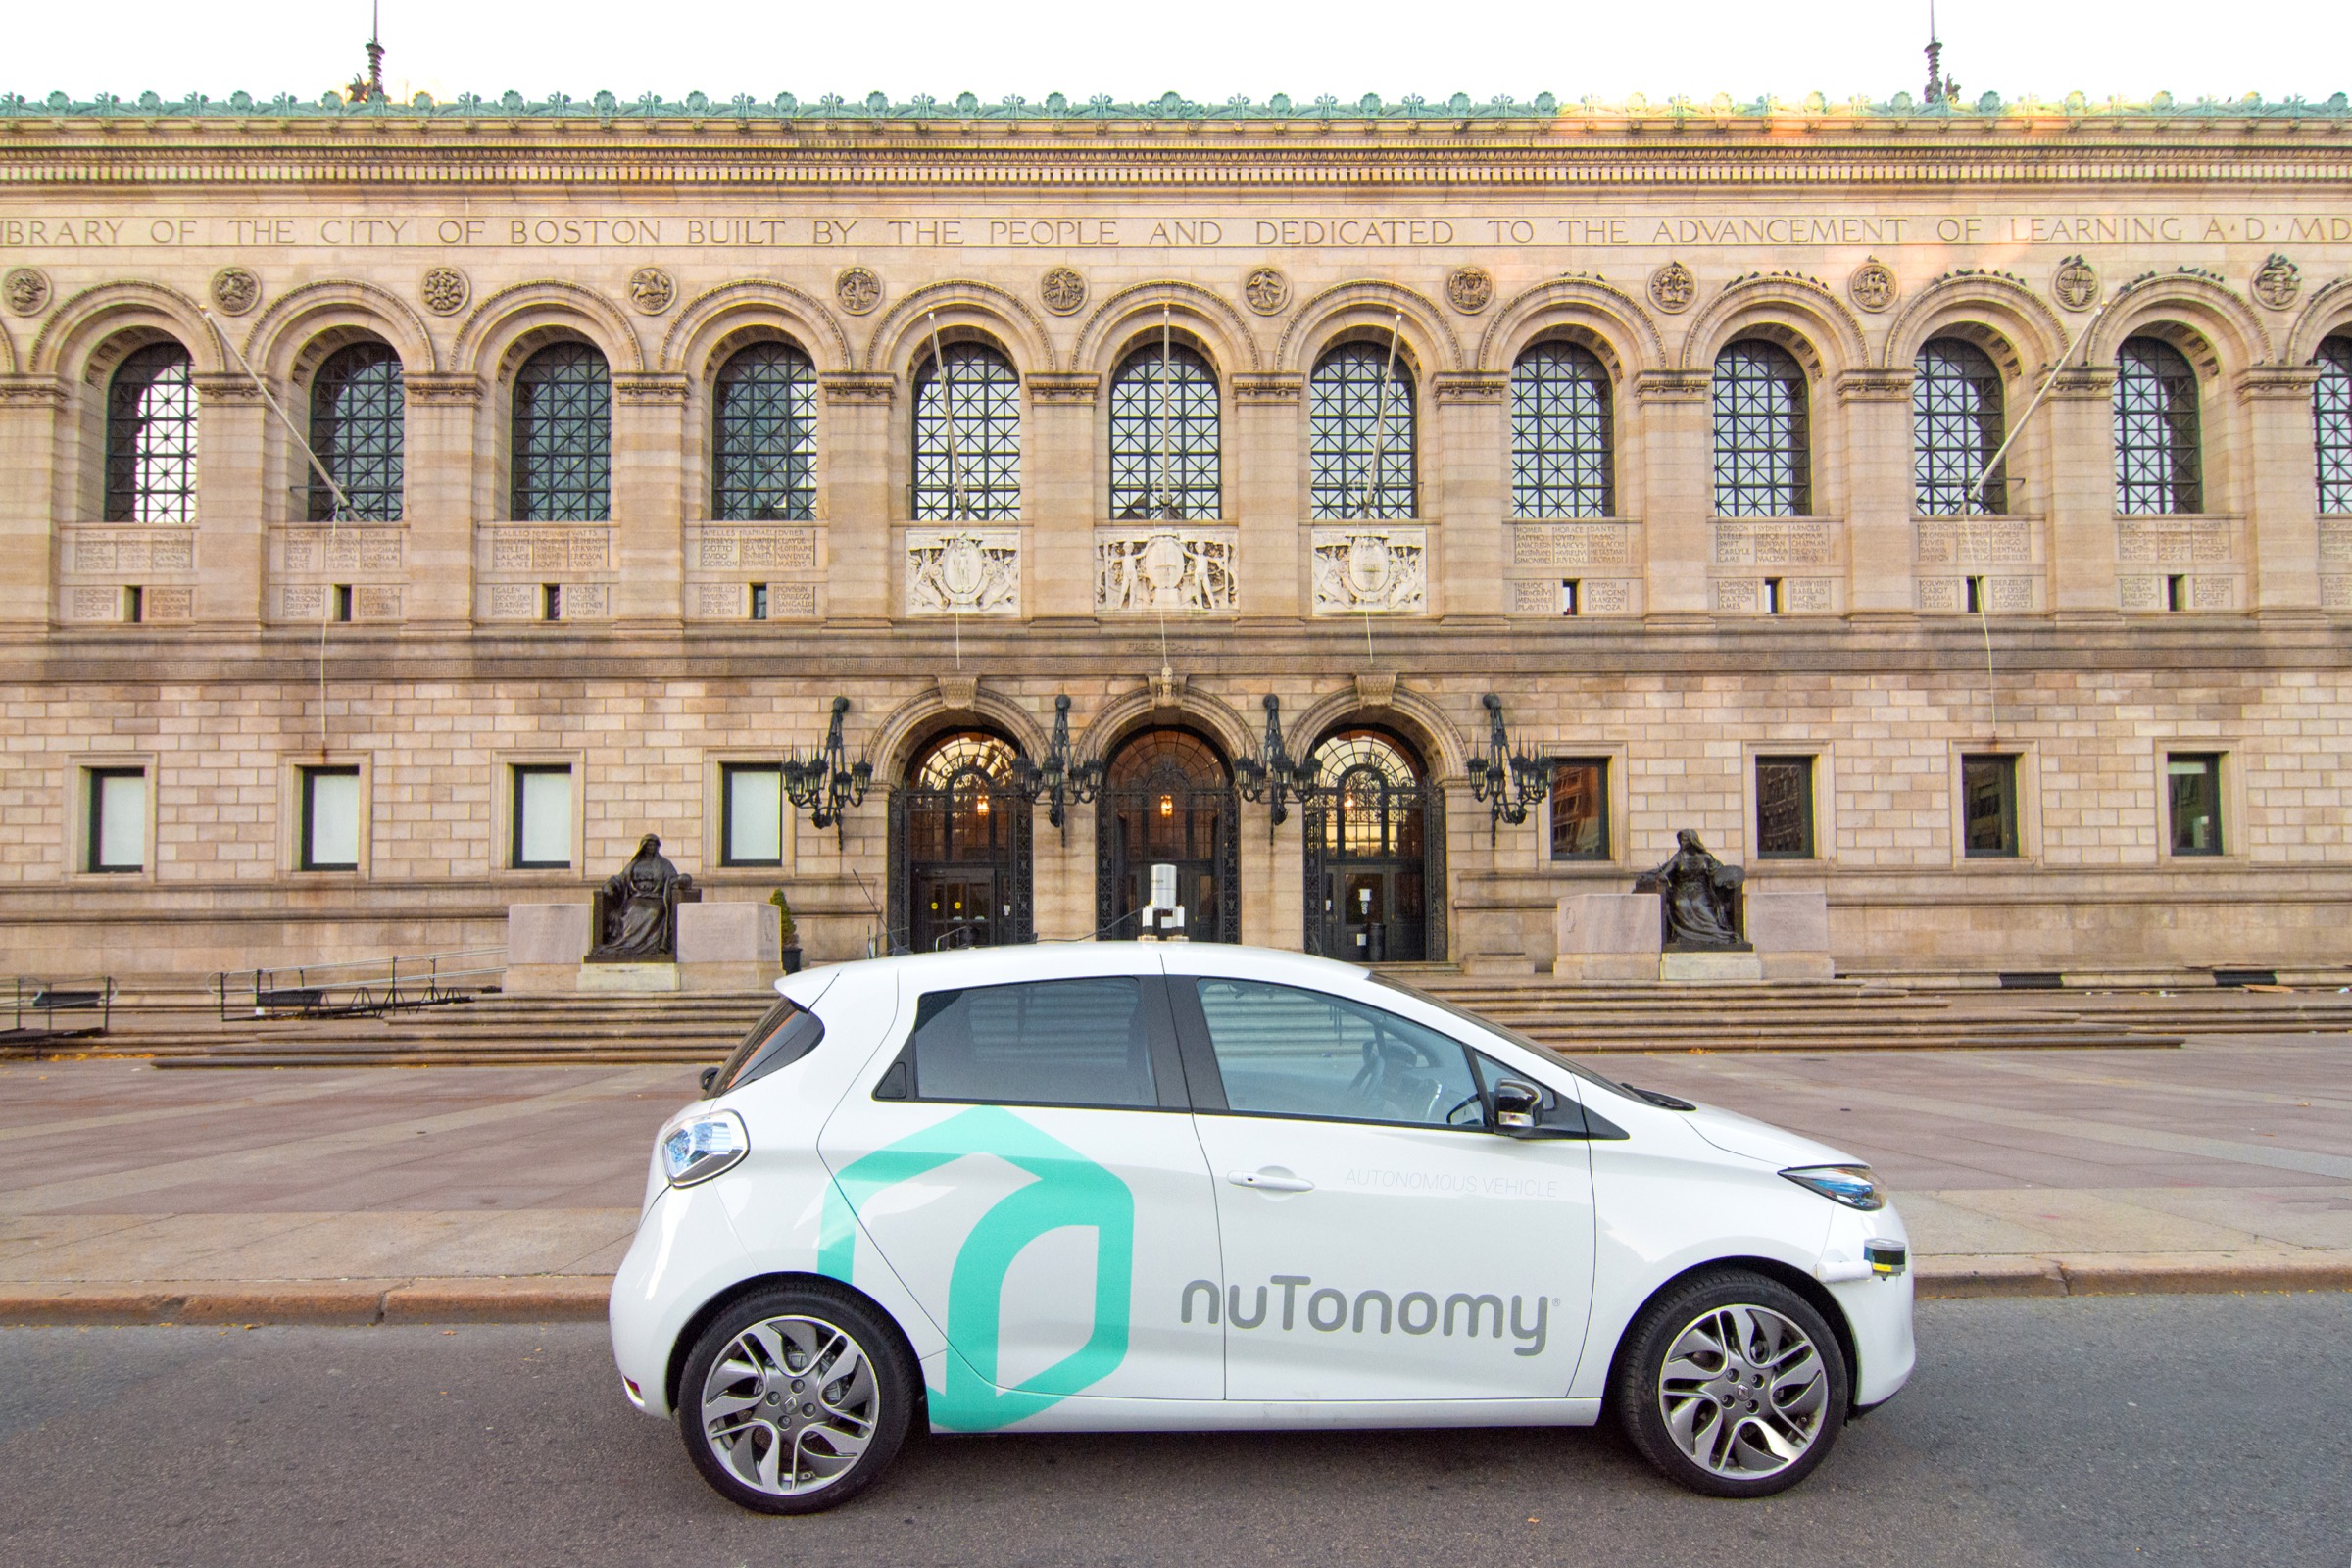 Delphi buys Nutonomy for $400 million to scale and deliver autonomous vehicles